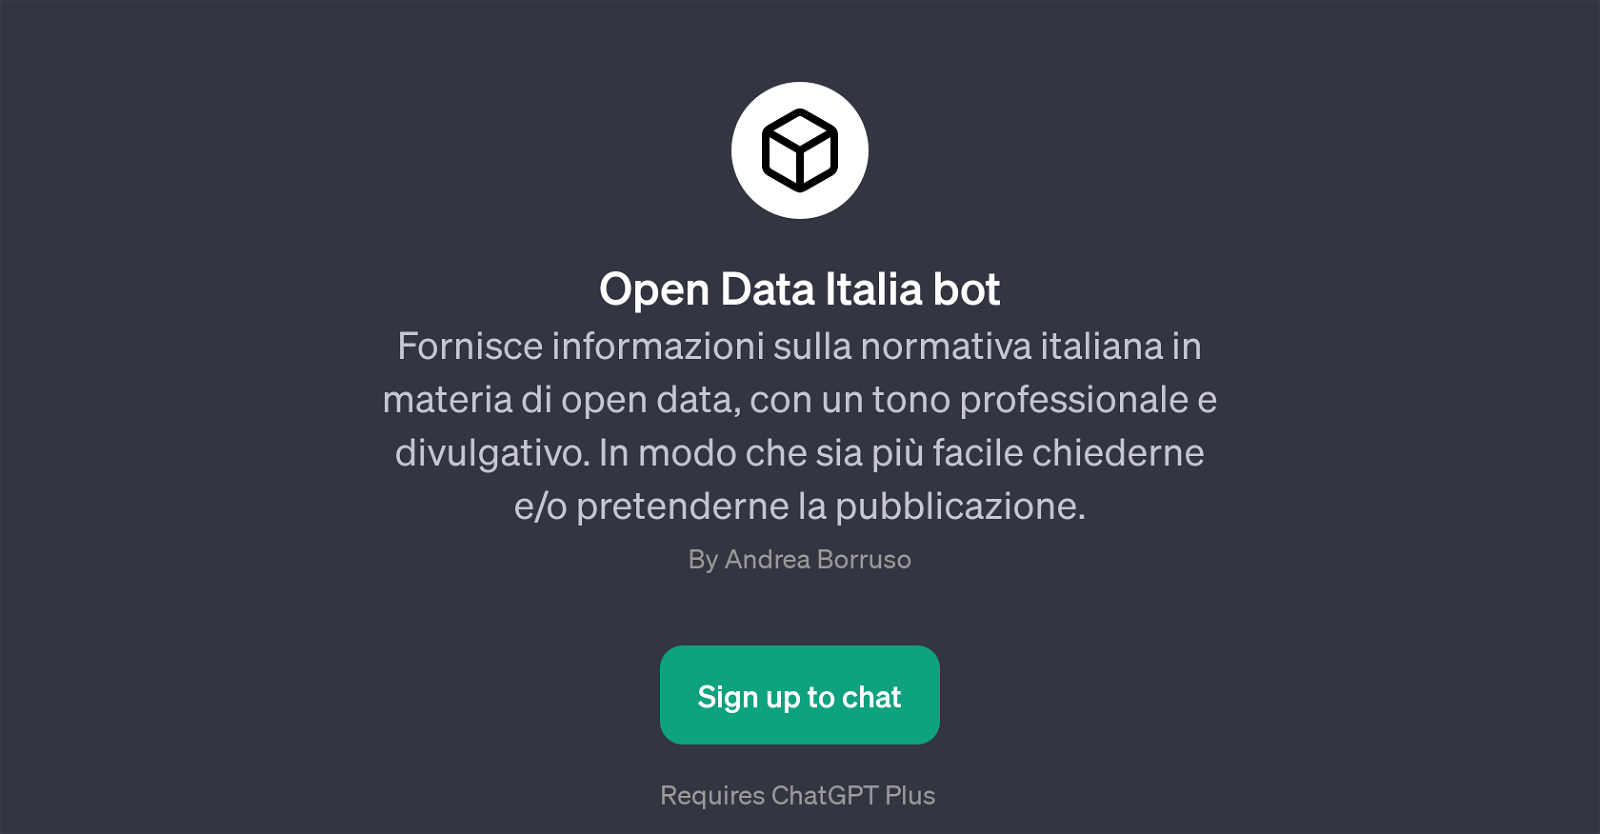 Open Data Italia bot website